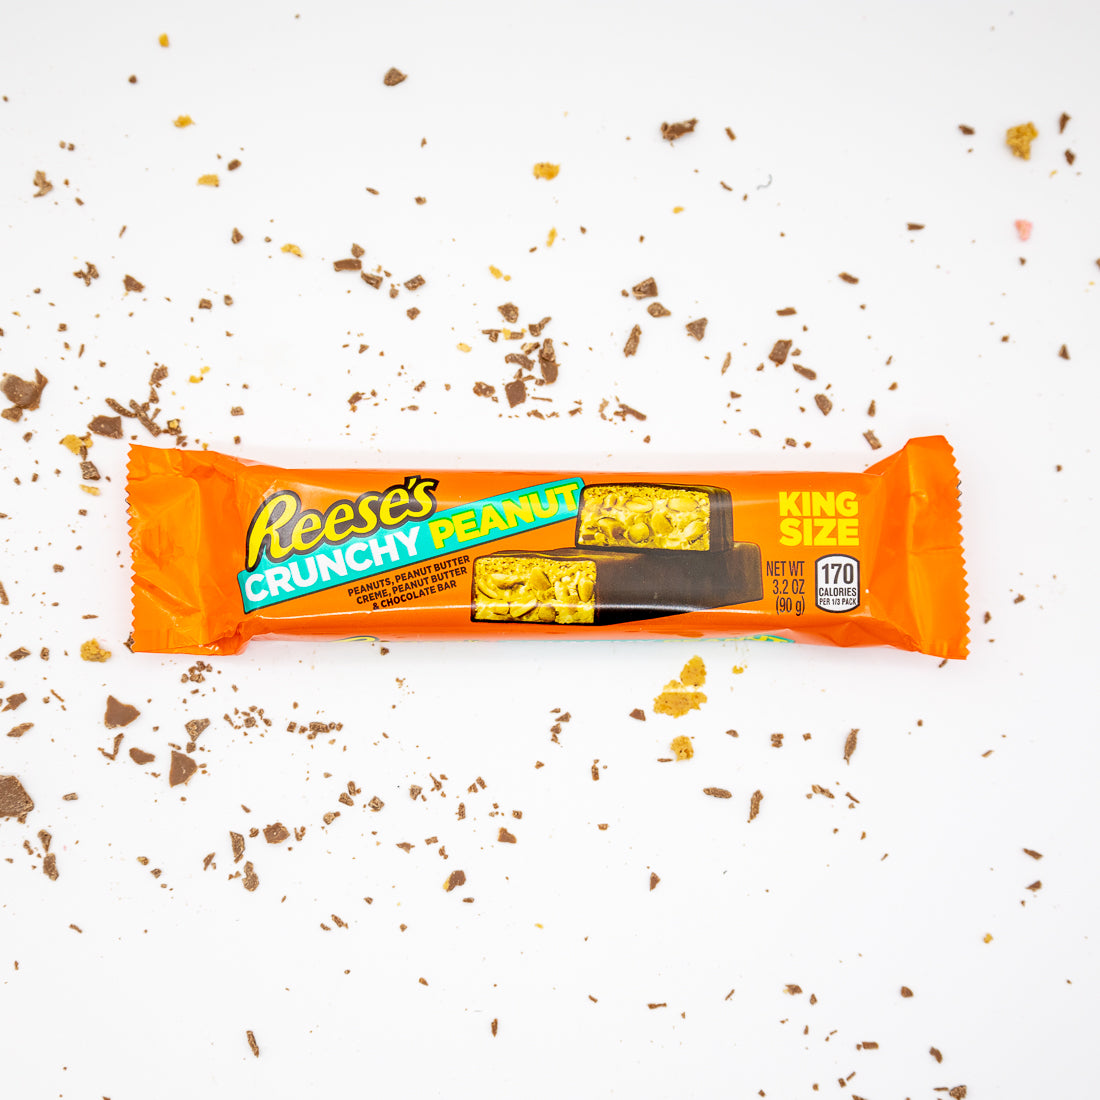 Reese's Crunch Peanut Chocolate Bar - King Size